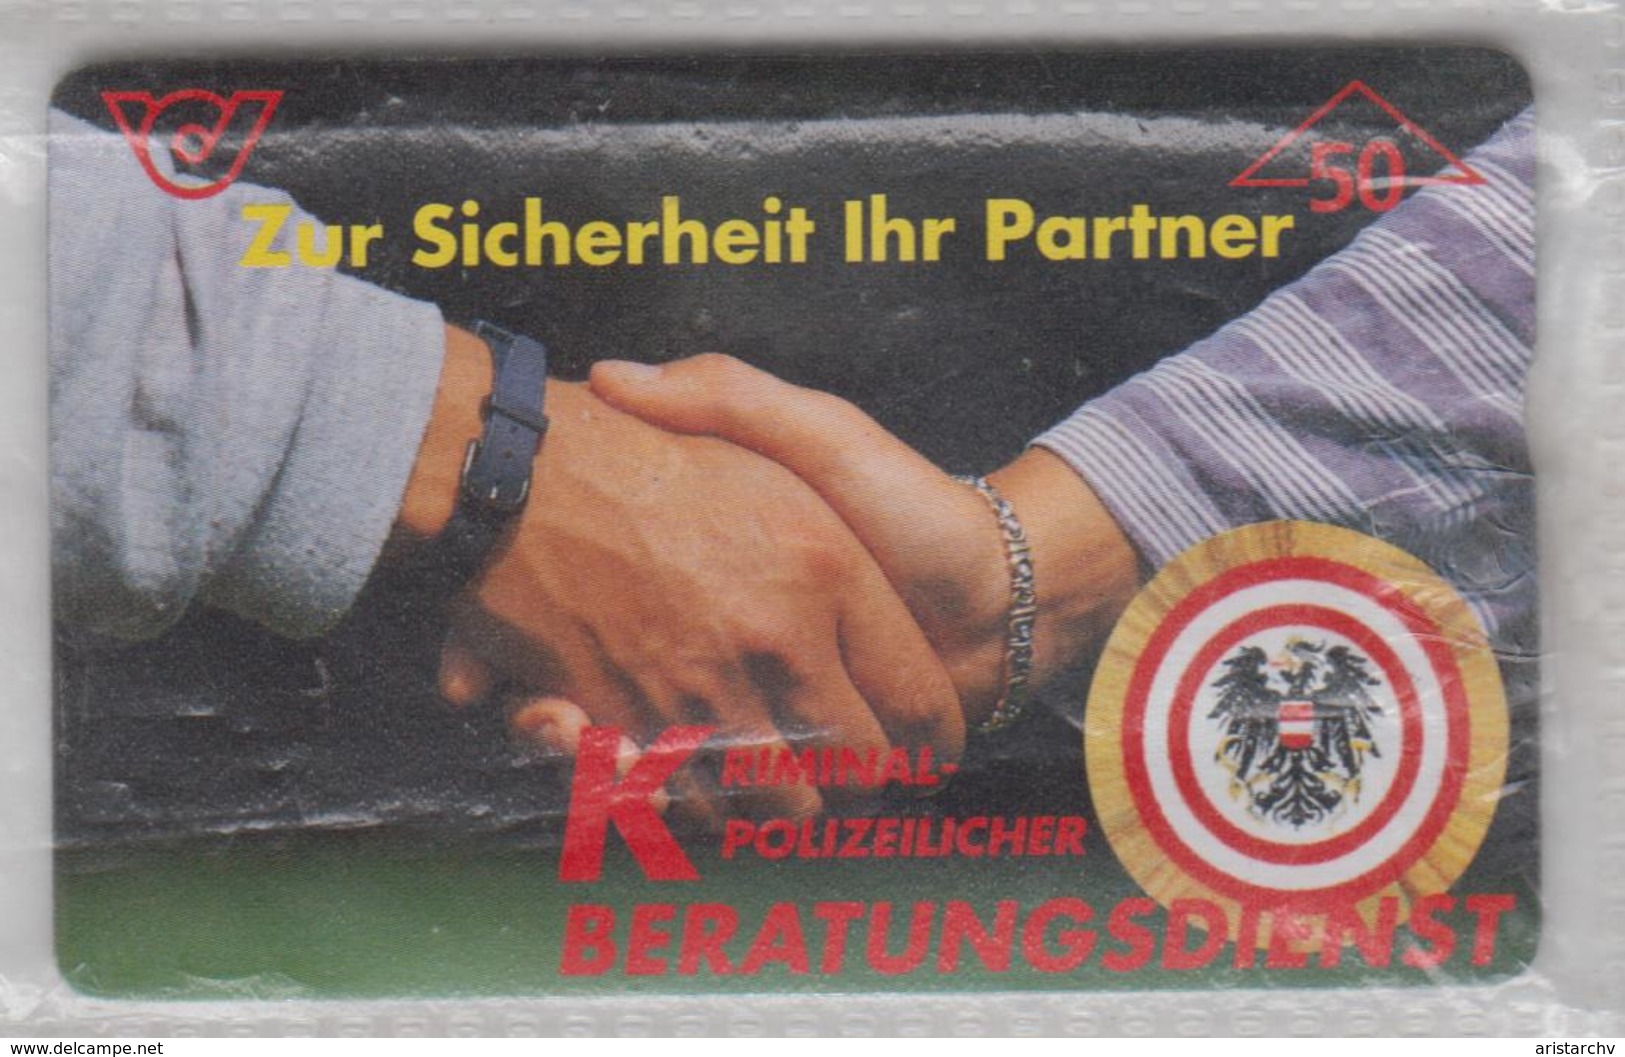 AUSTRIA 1996 KRIMINALPOLIZEILICHER BERATUNGSDIENST CRIMINAL POLICE USED PHONE CARD - Polizia